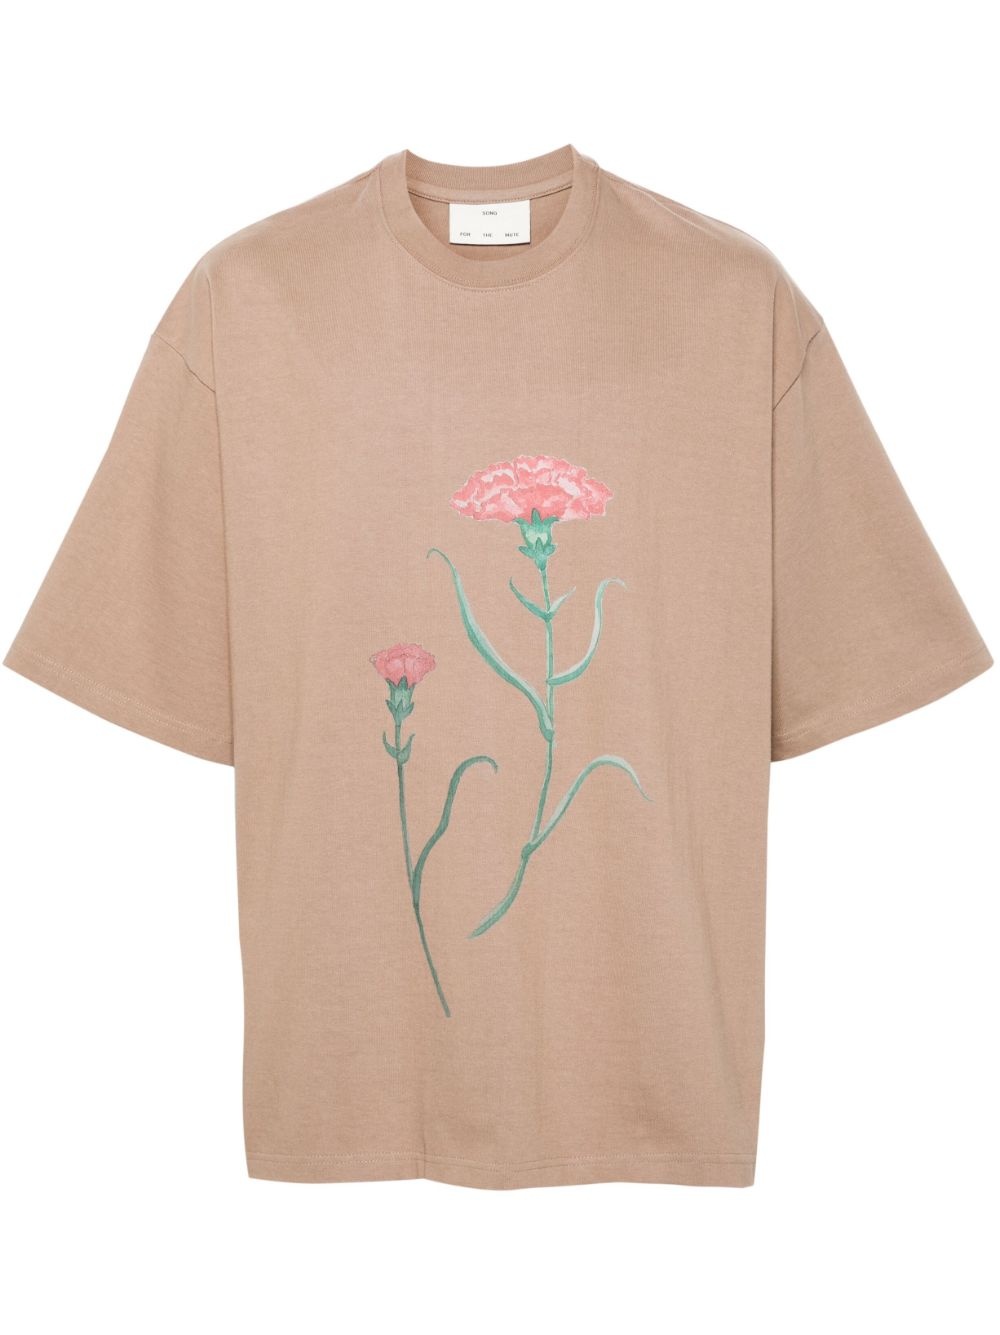 Romance cotton T-shirt - 1